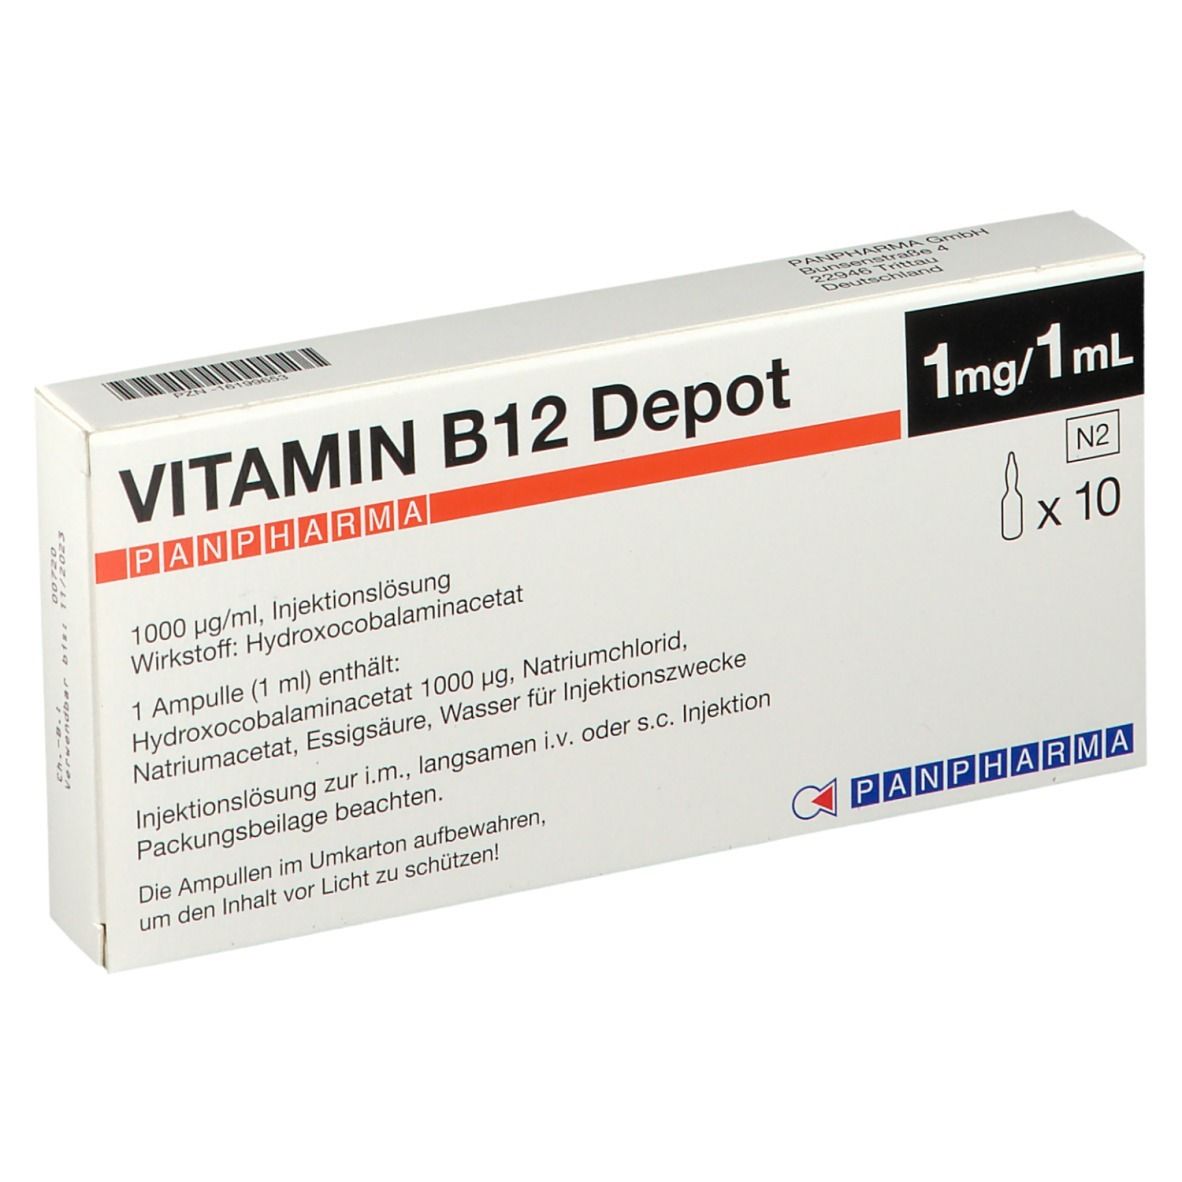 Vitamin B12 Depot 1 mg/ml Panpharma